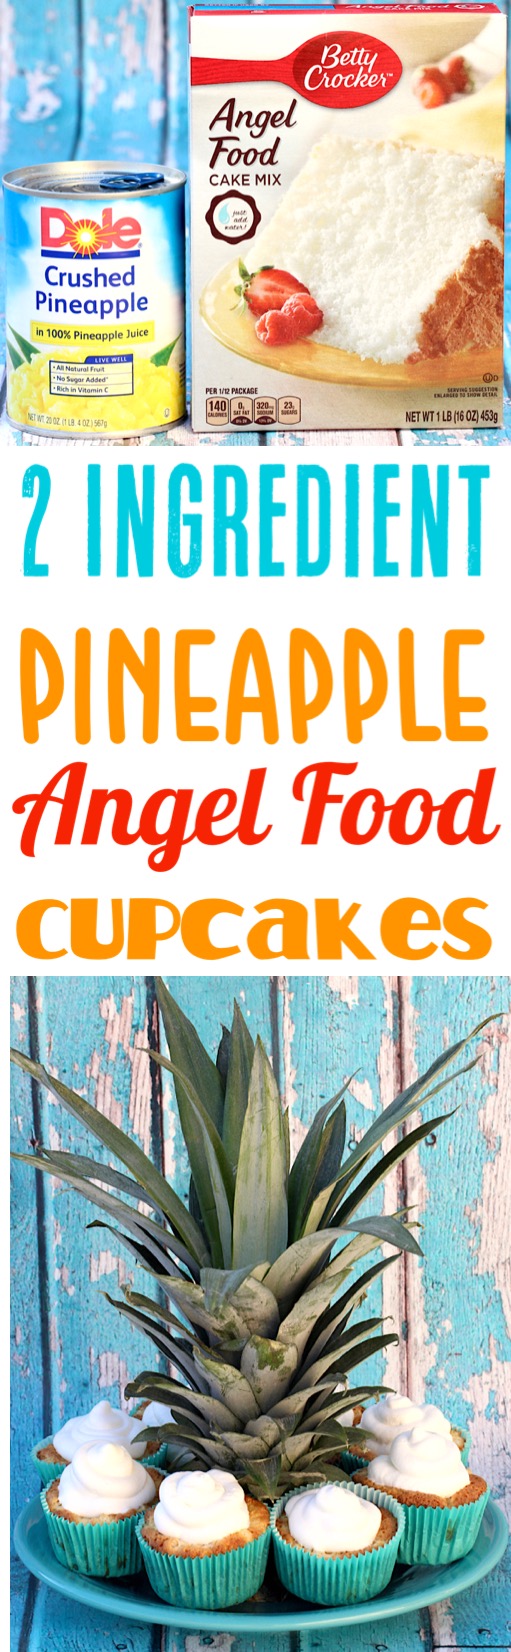 Pineapple Angel Food Cupcakes Recipe Cake